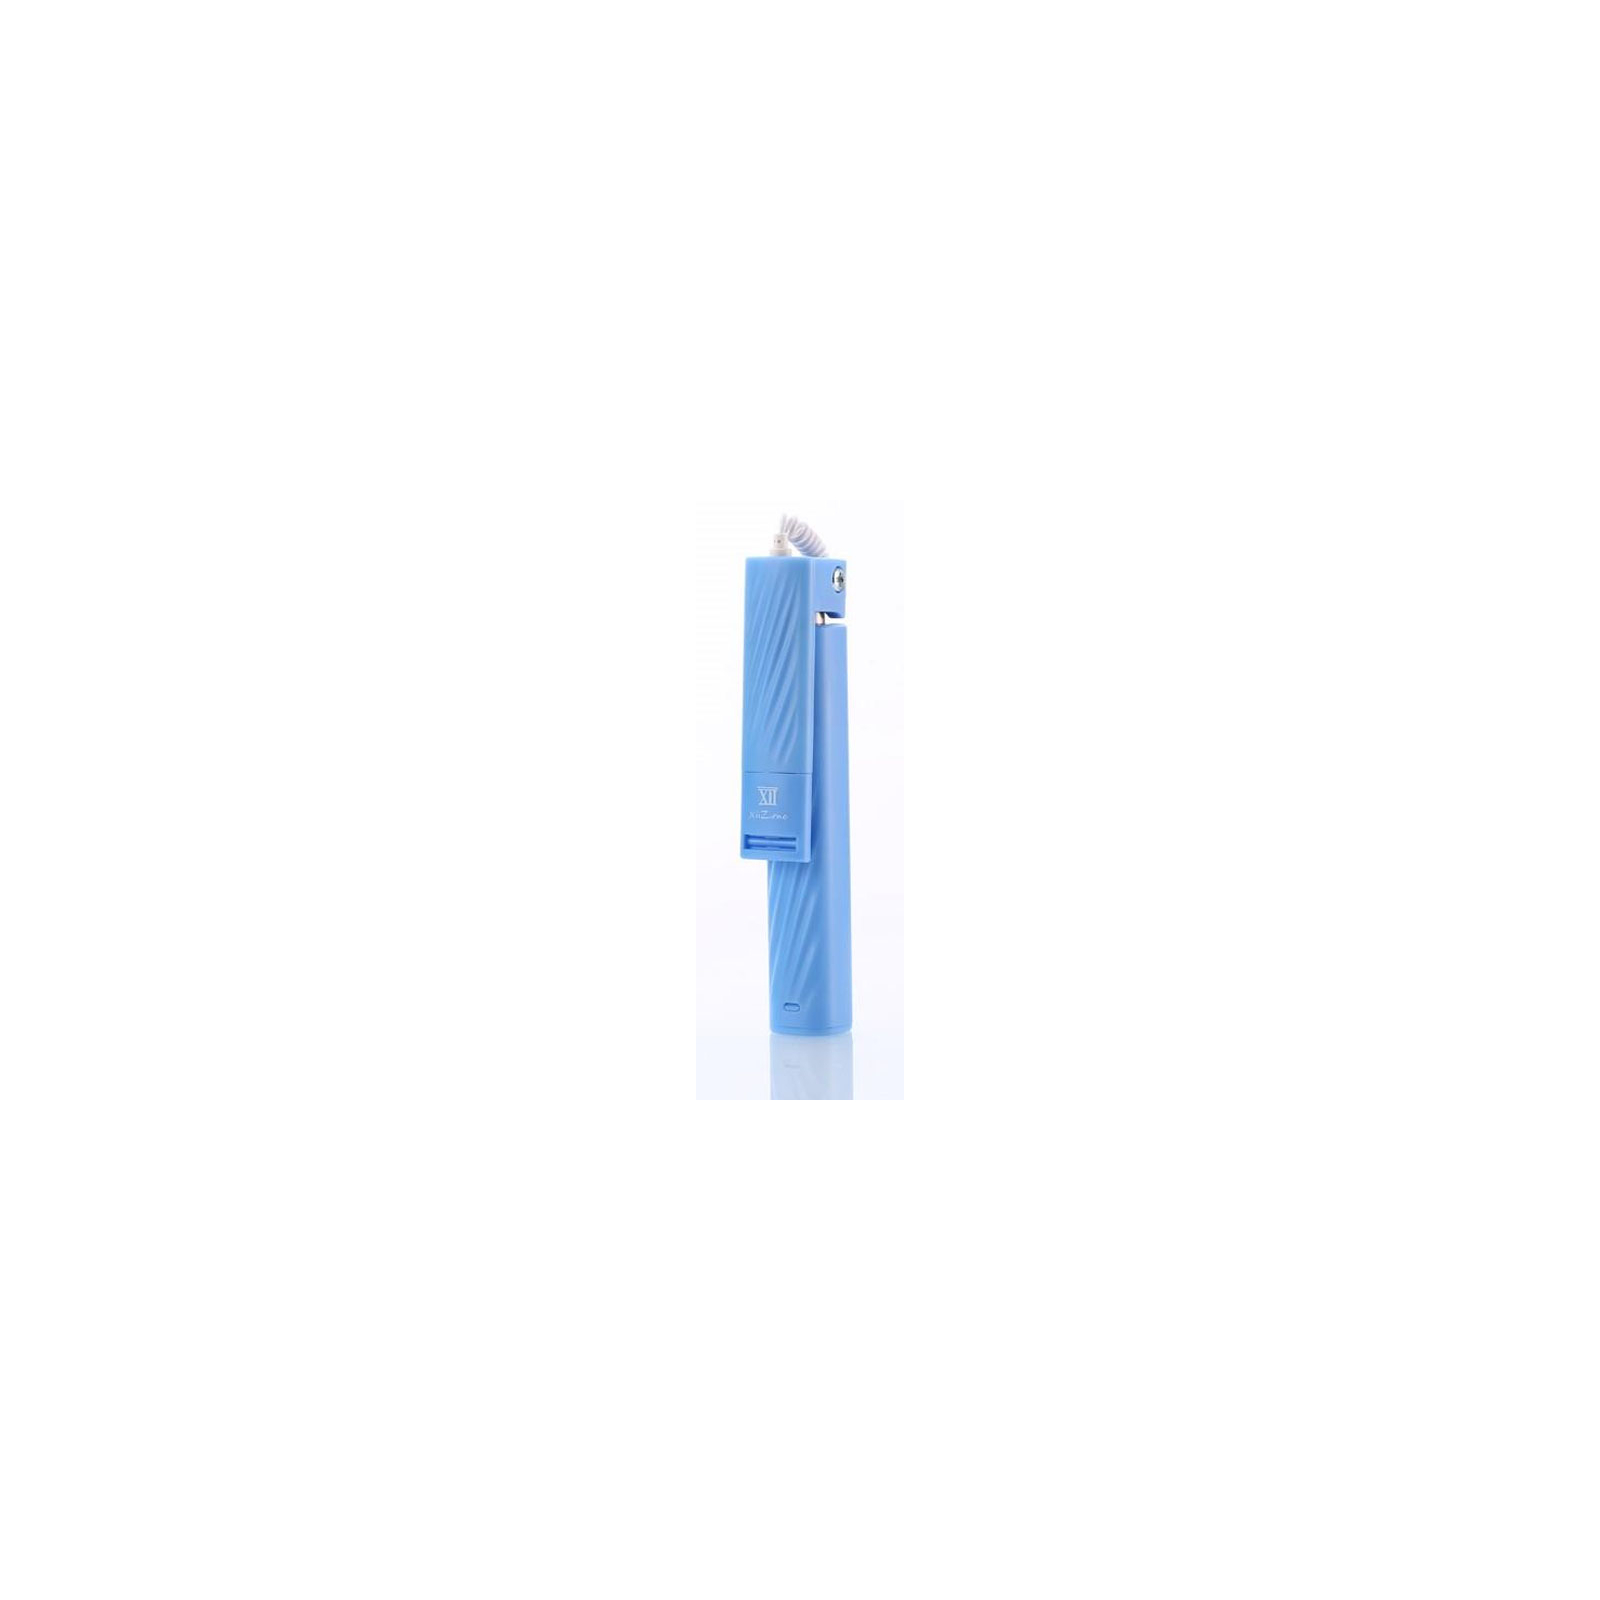 Монопод для селфи Remax Mini Selfie Stick XT, Blue (XT-P02-BLUE)